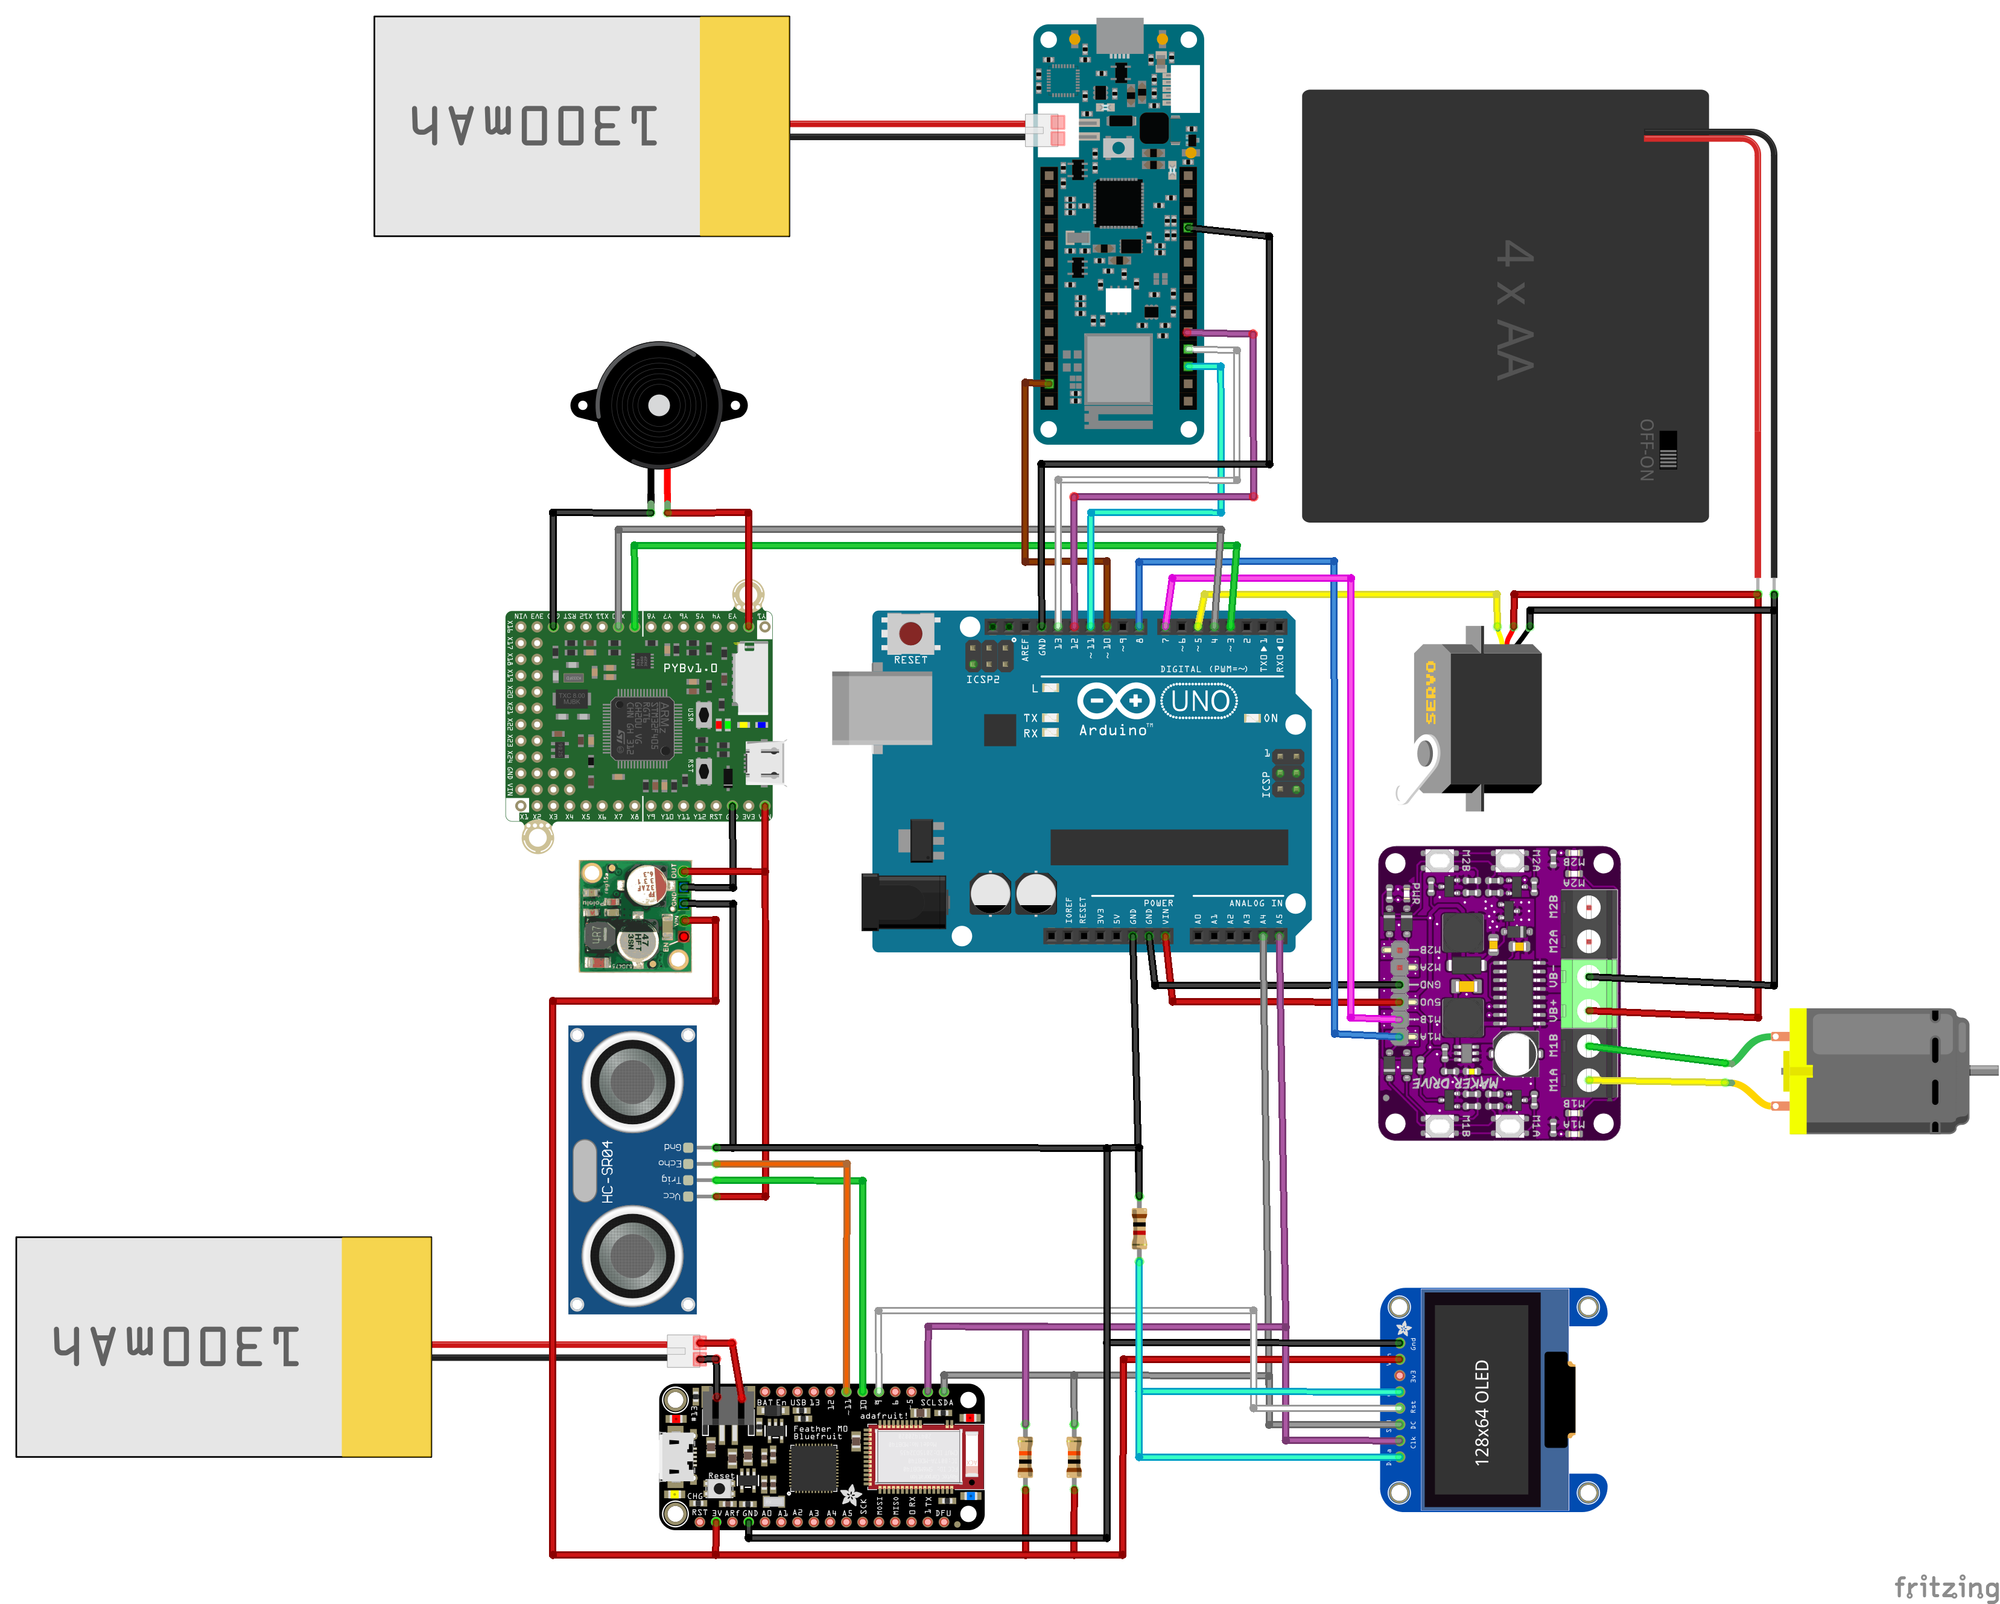 Circuit Diagram using Arduino MKR WiFi 1010, H-Bridge, servo motor, and a DC motor